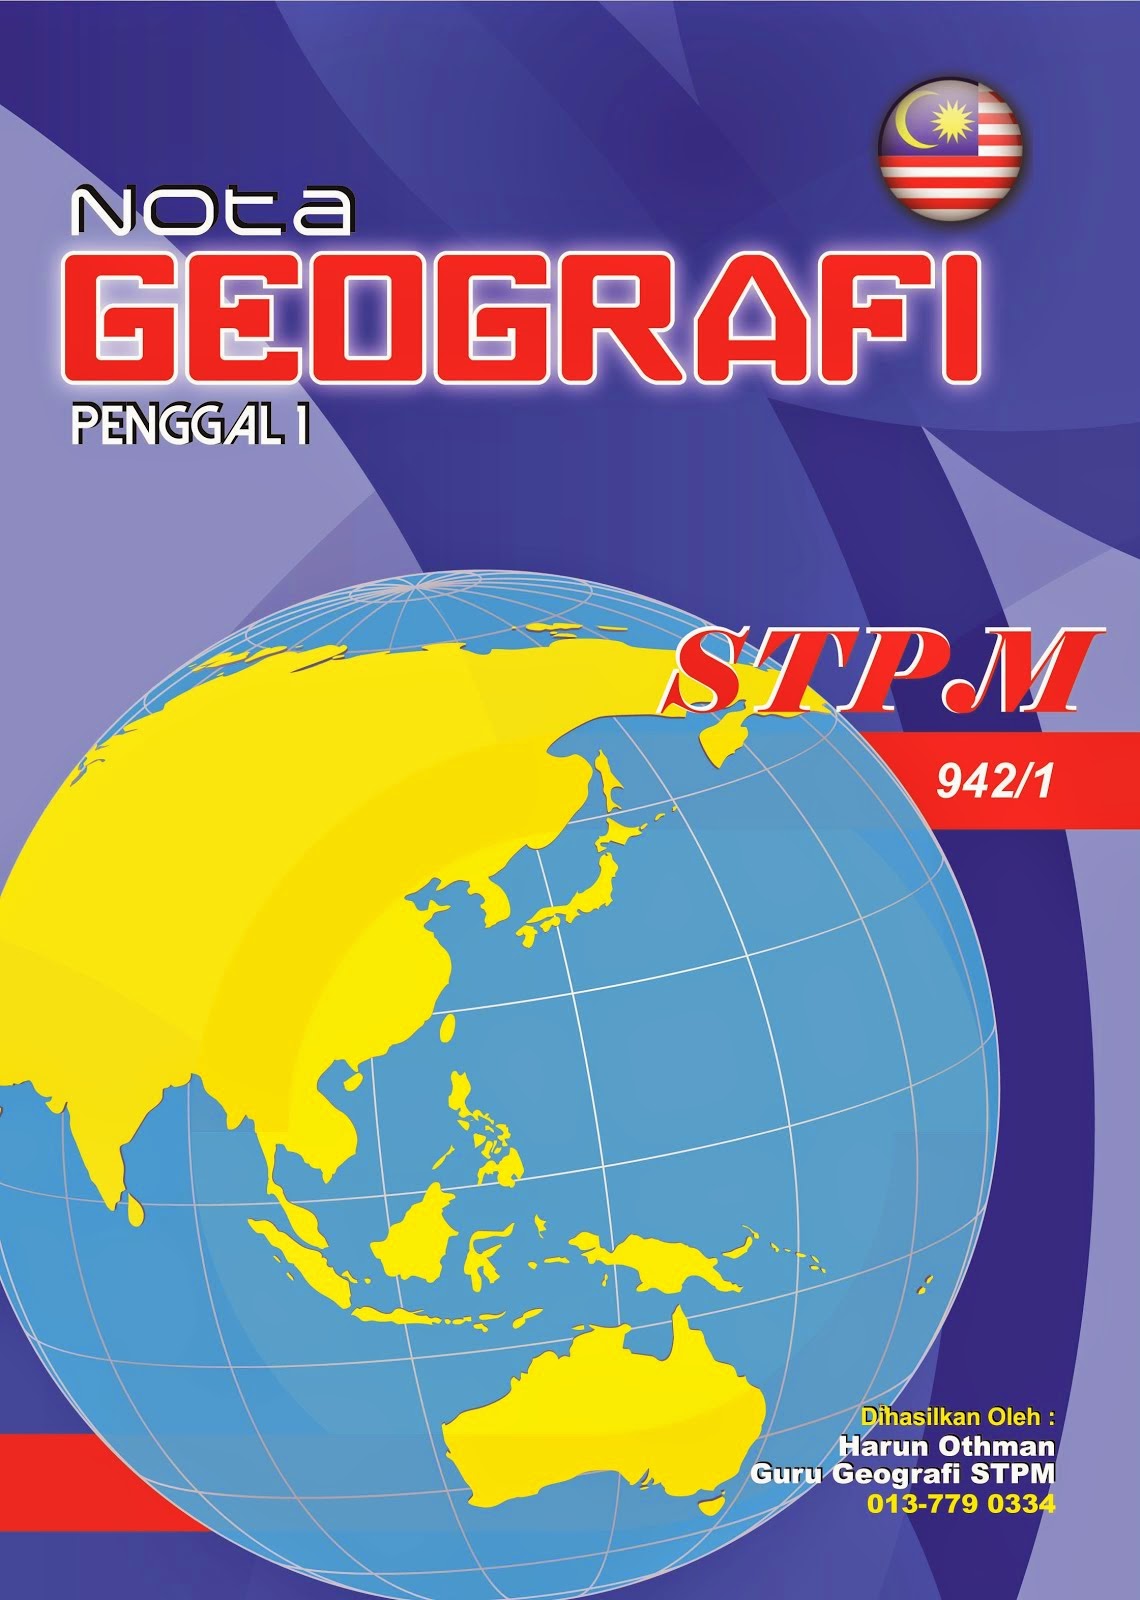 Soalan Geografi Stpm Penggal 2 2019 - Selangor a